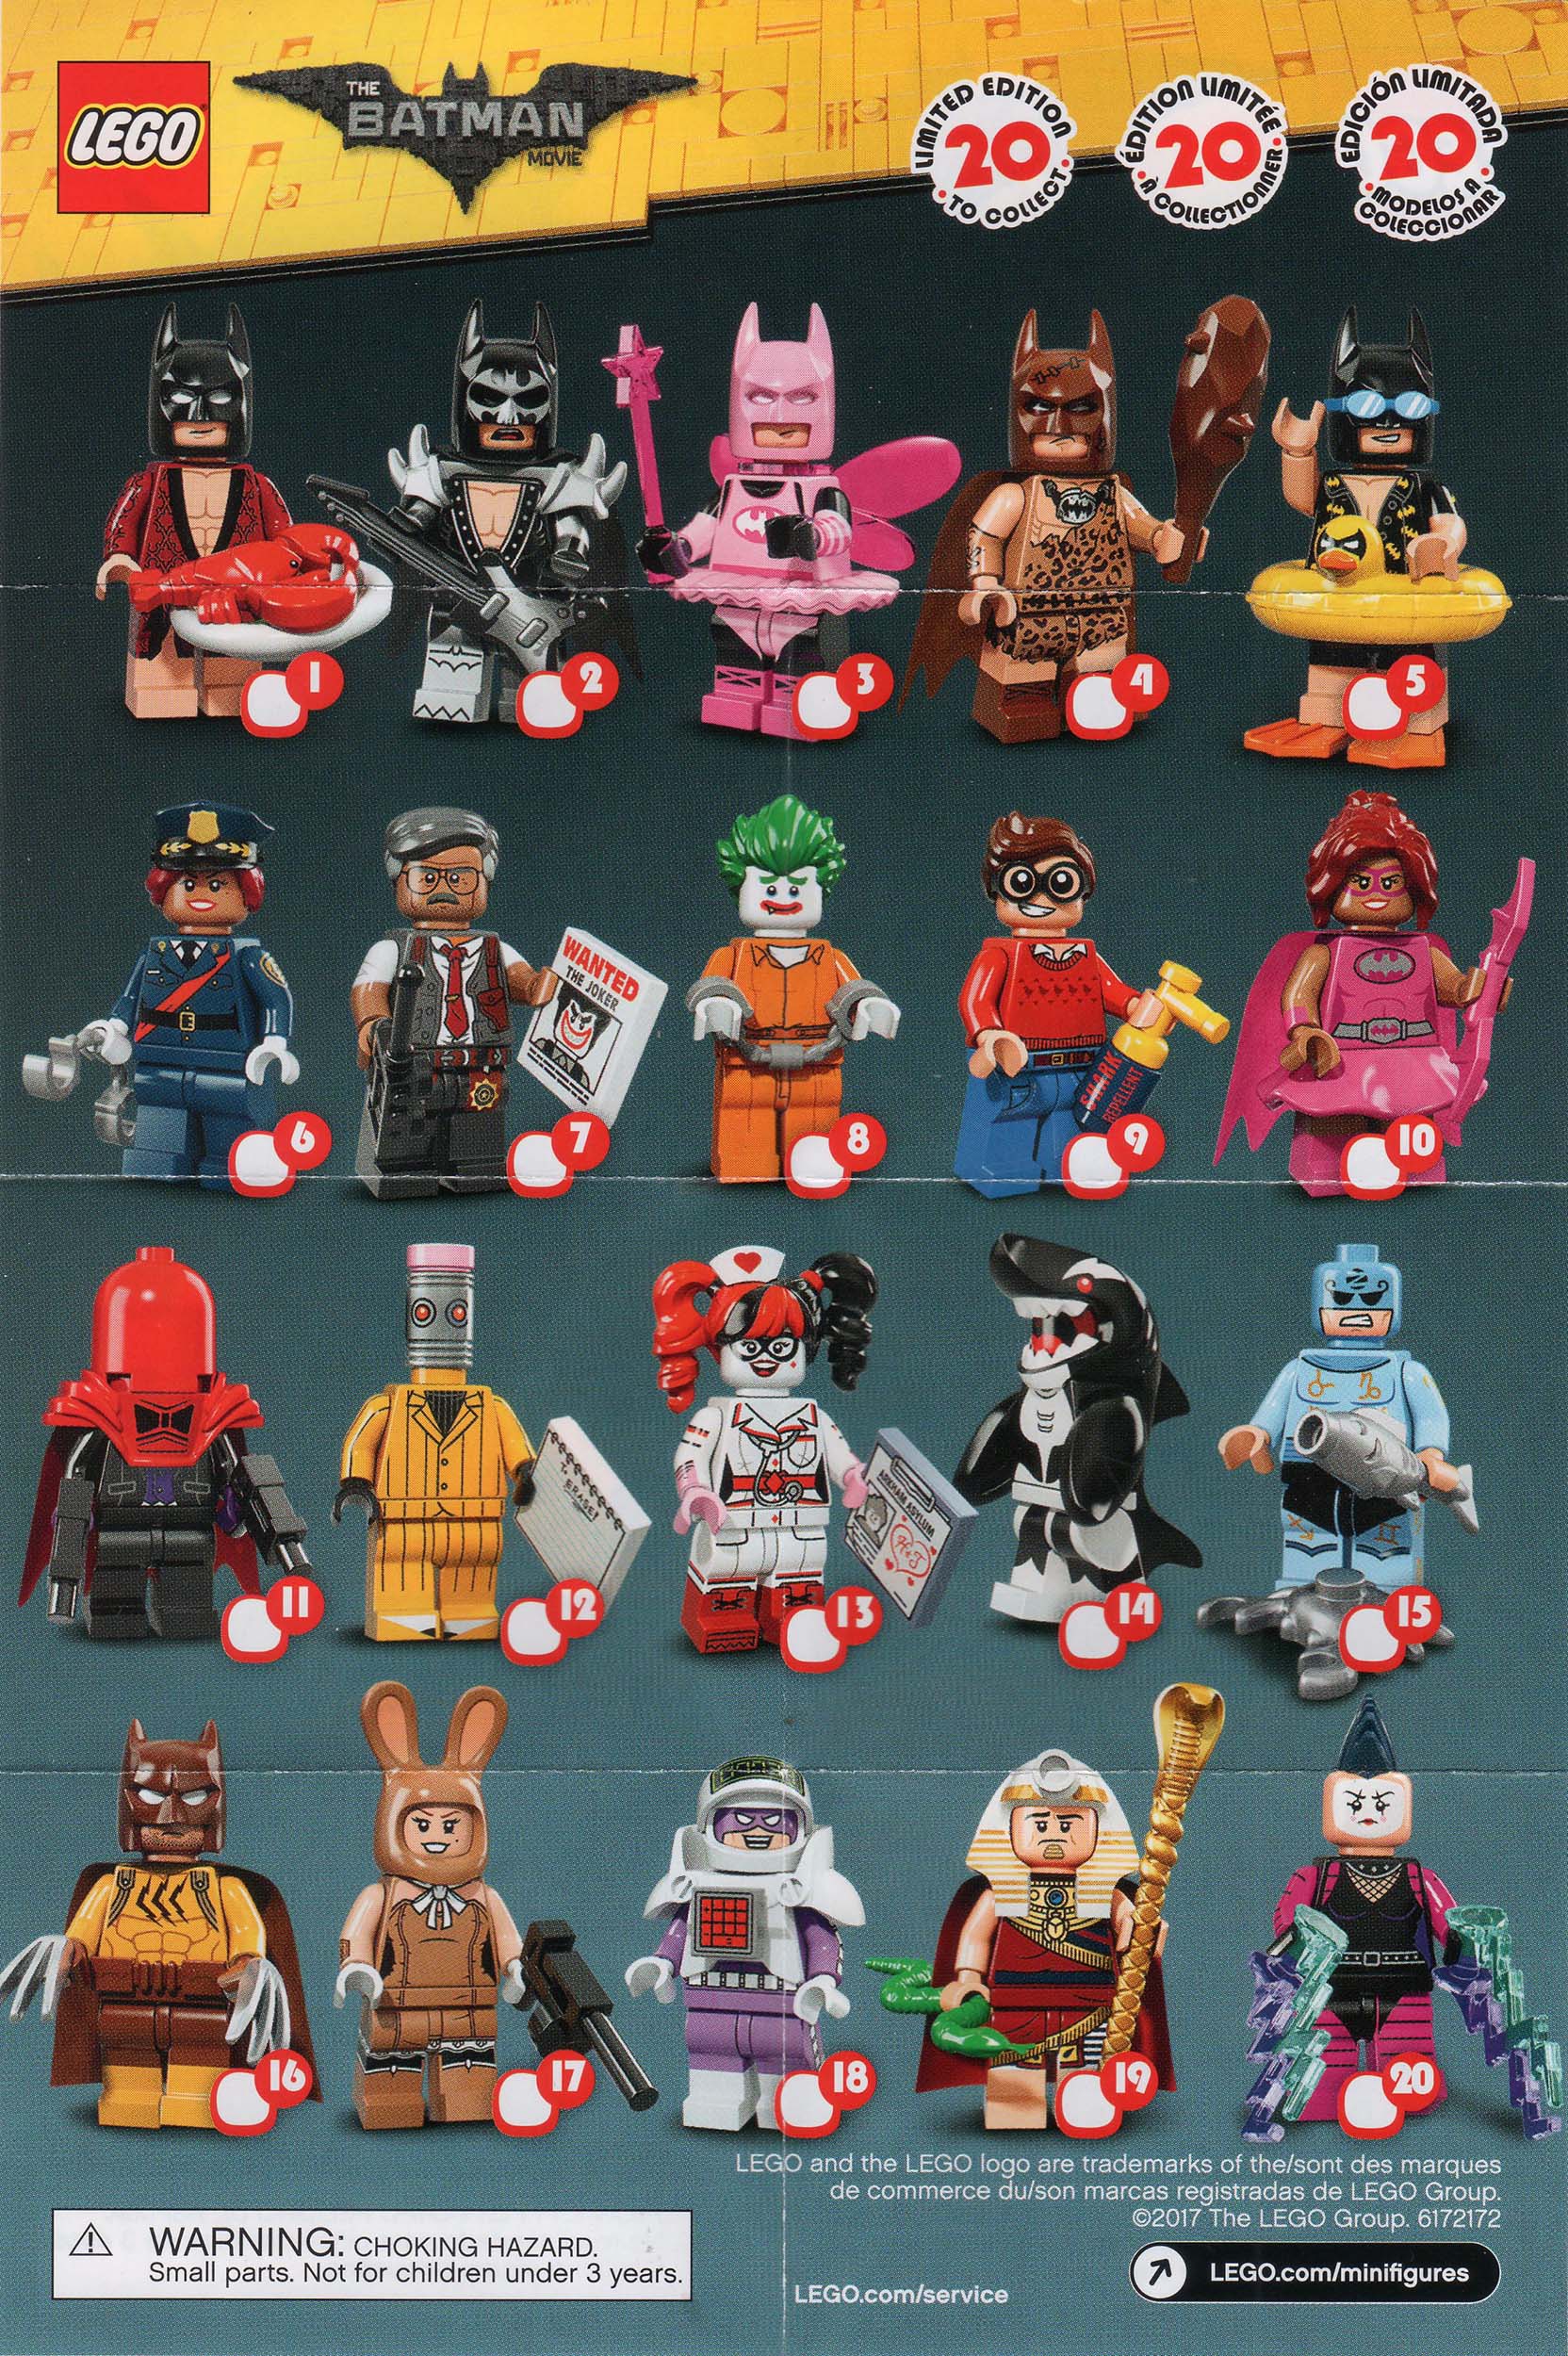 Pick Choose the one you want LEGO Mini Figures BATMAN MOVIE SERIES 1 & 2 